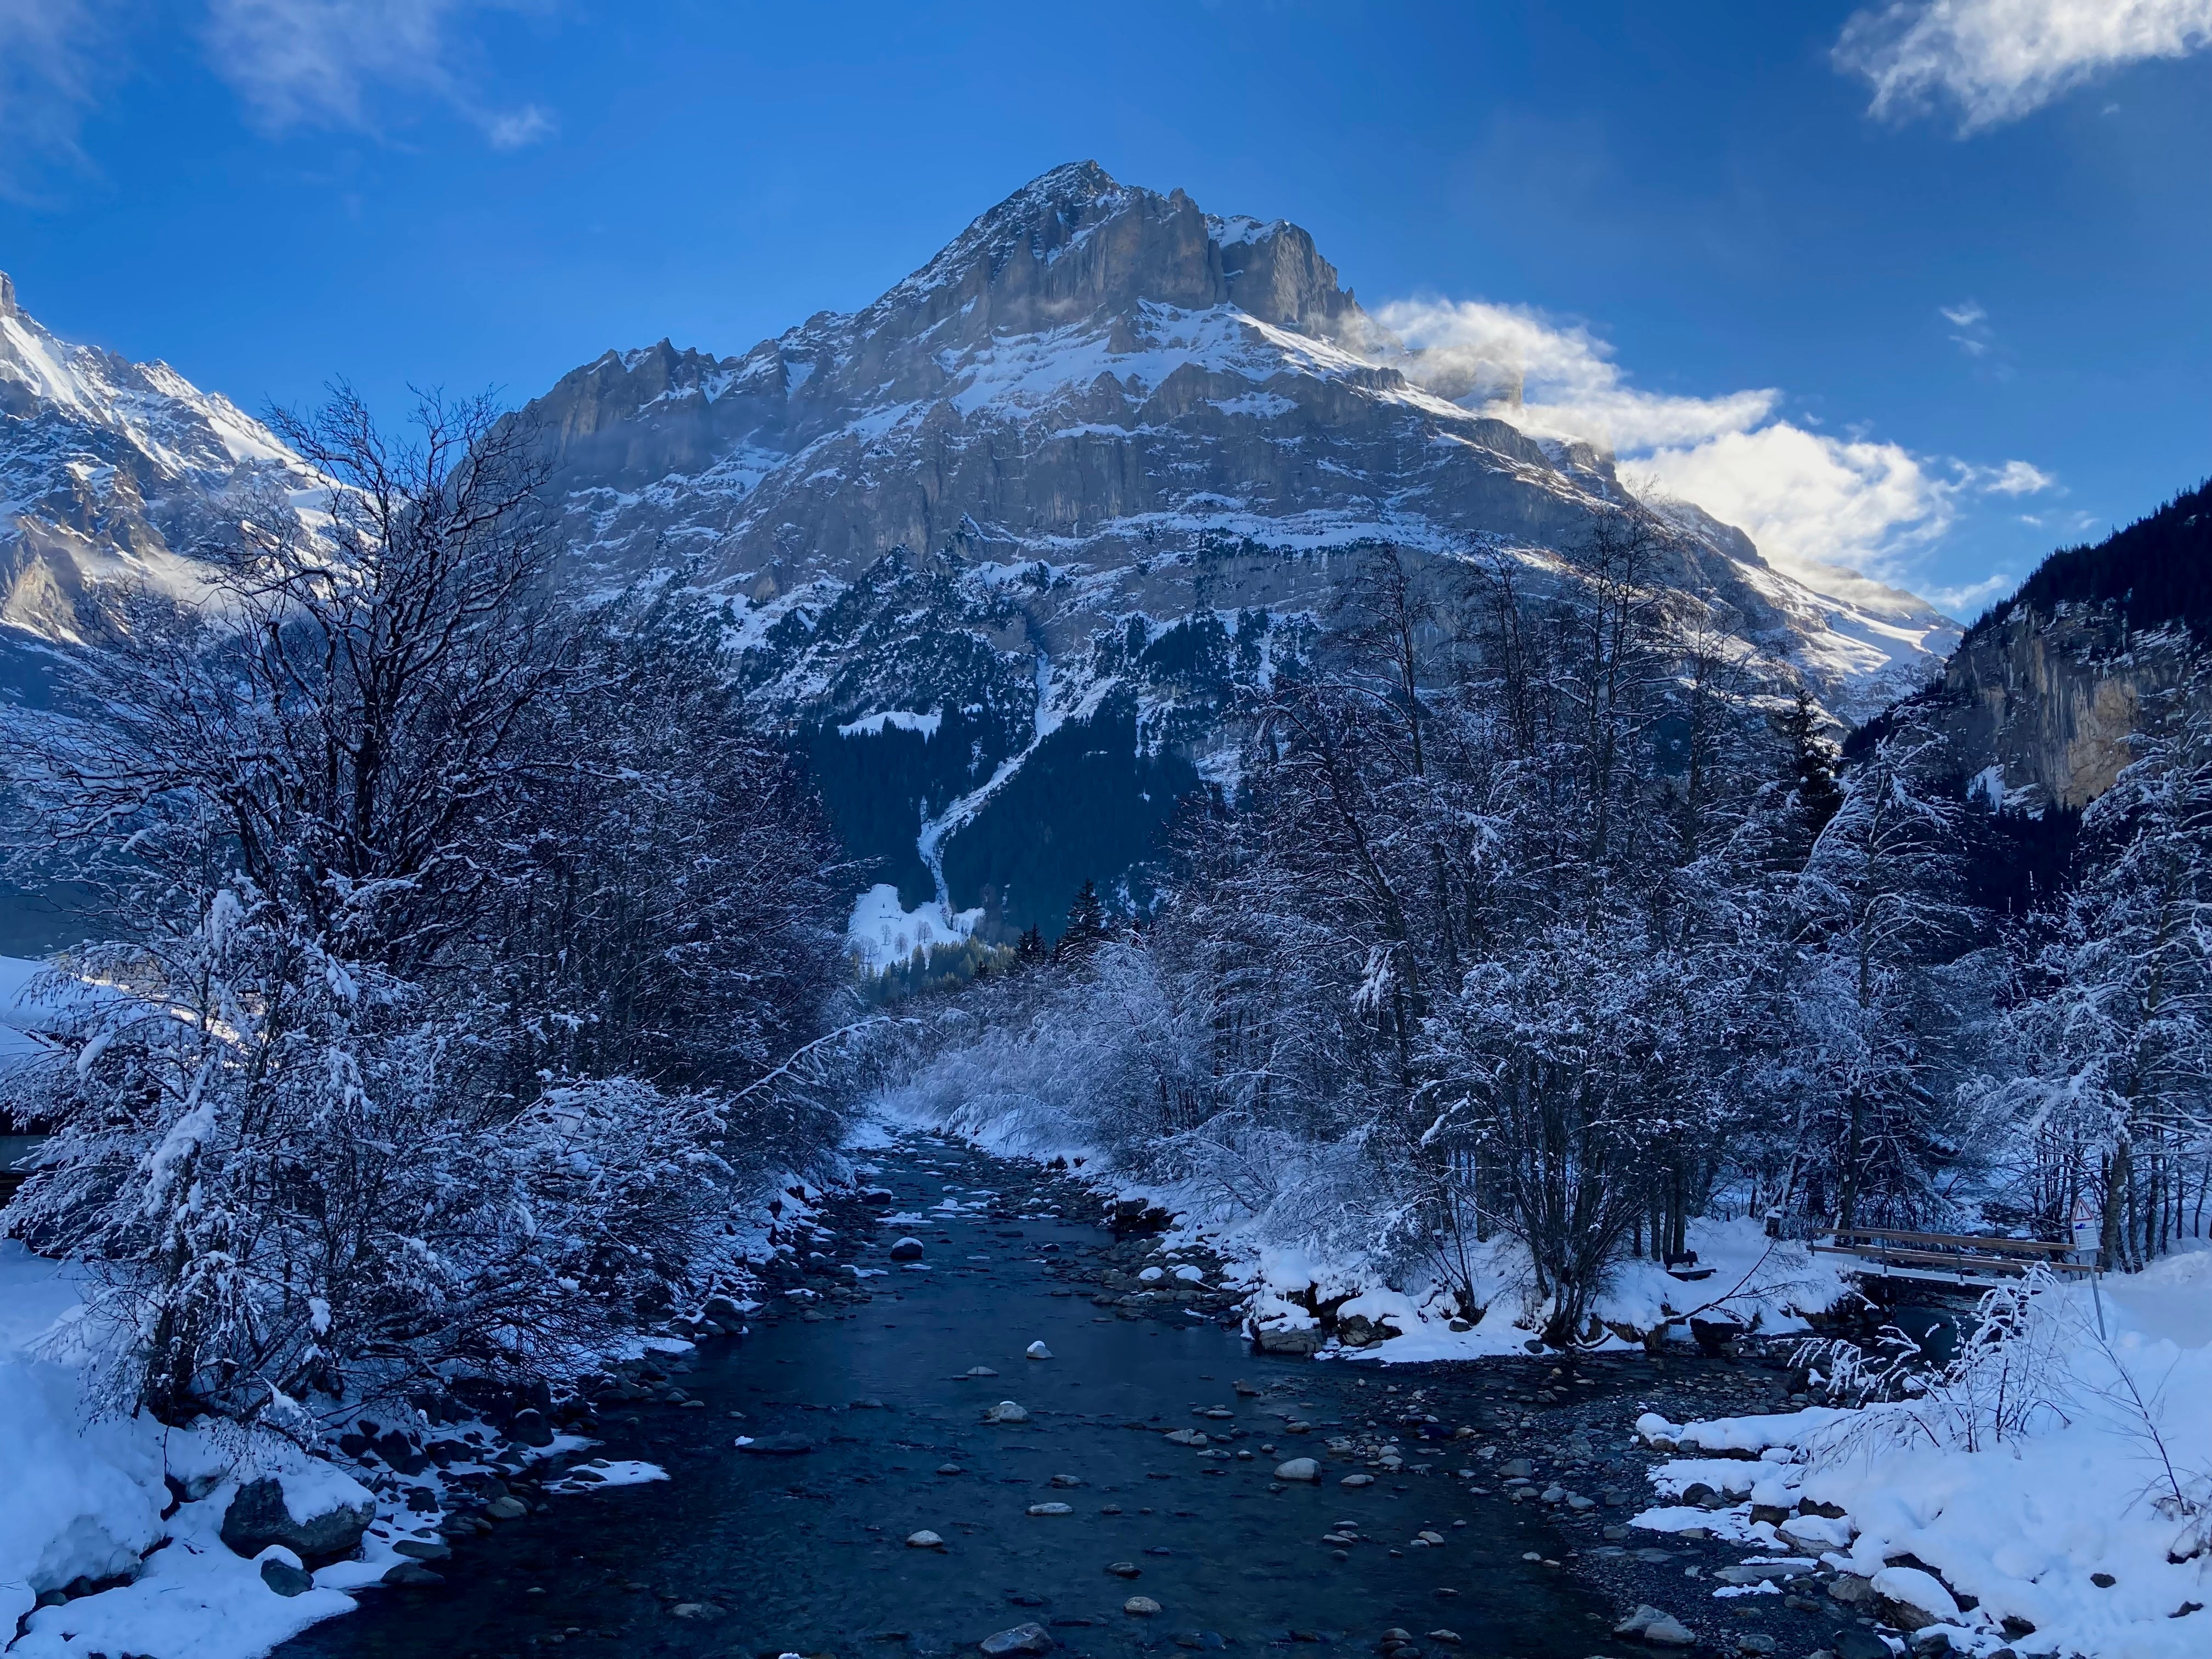 Jaw-dropping scenery in the Jungfrau region